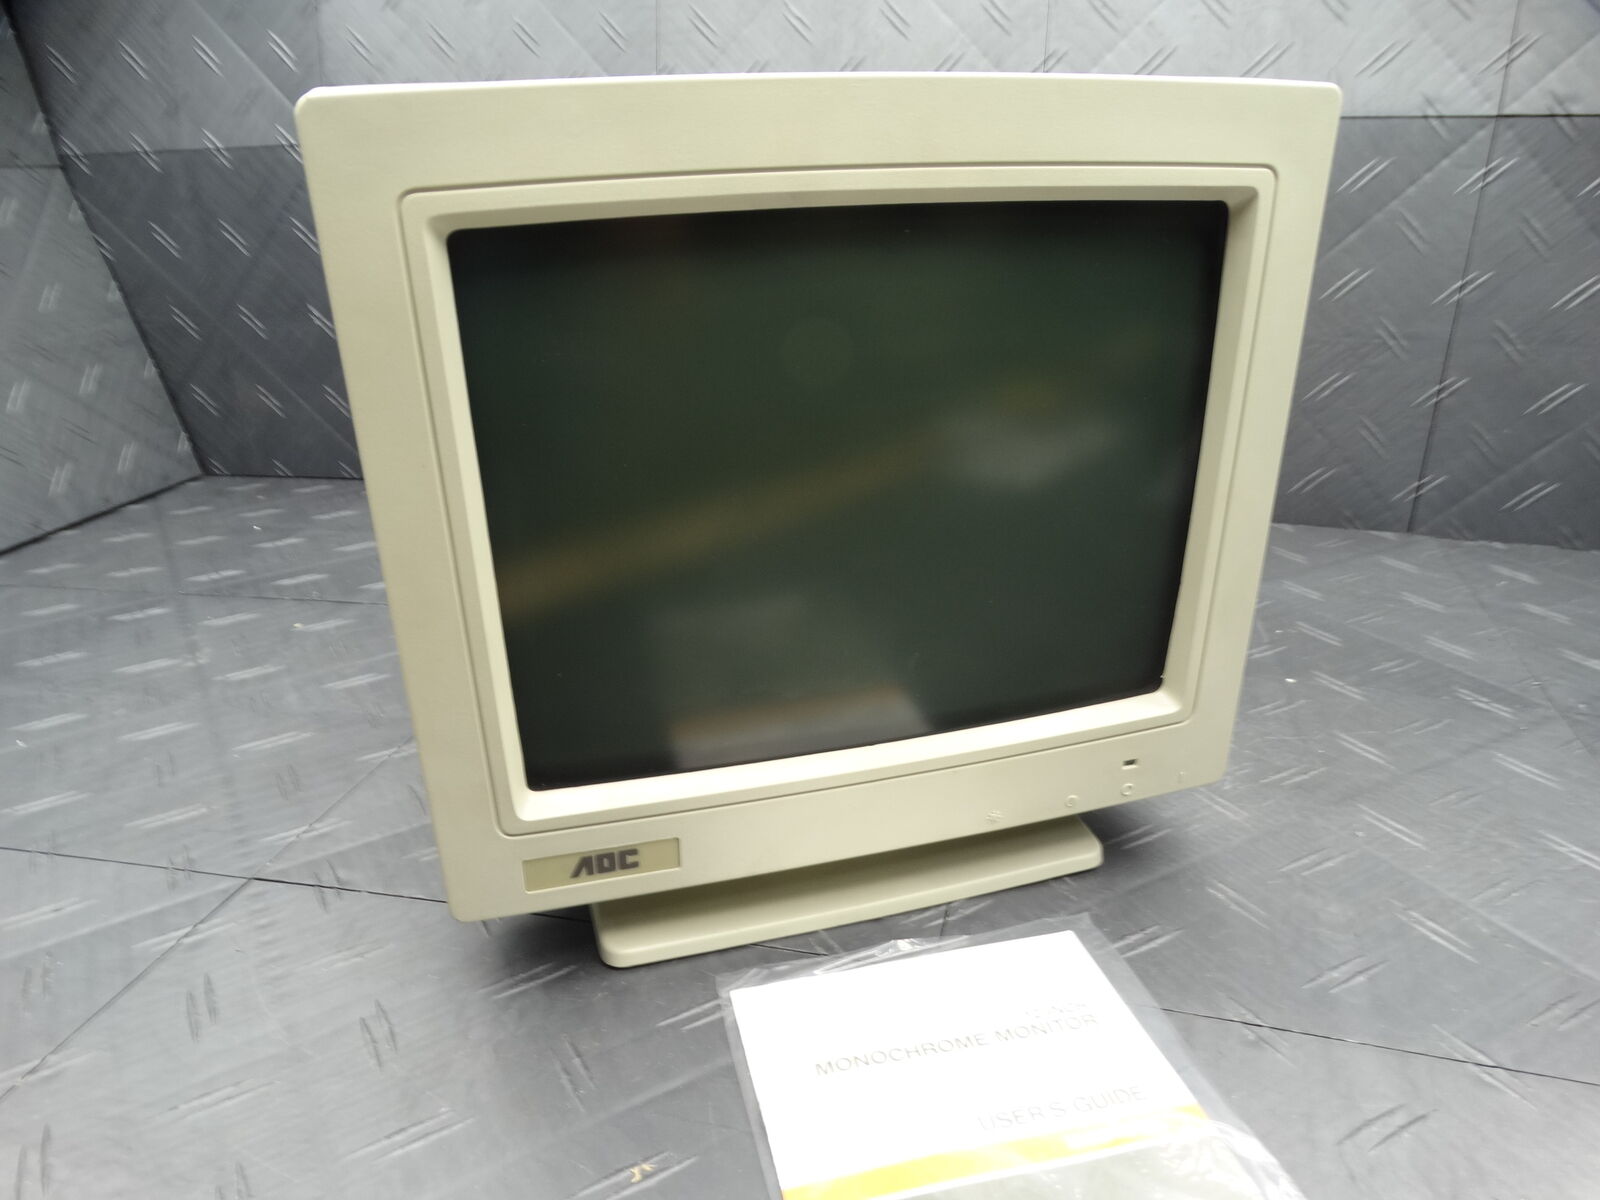 AOC 14in Monochrome Monitor MM-413S VGA Mainframe Collection RARE 1993